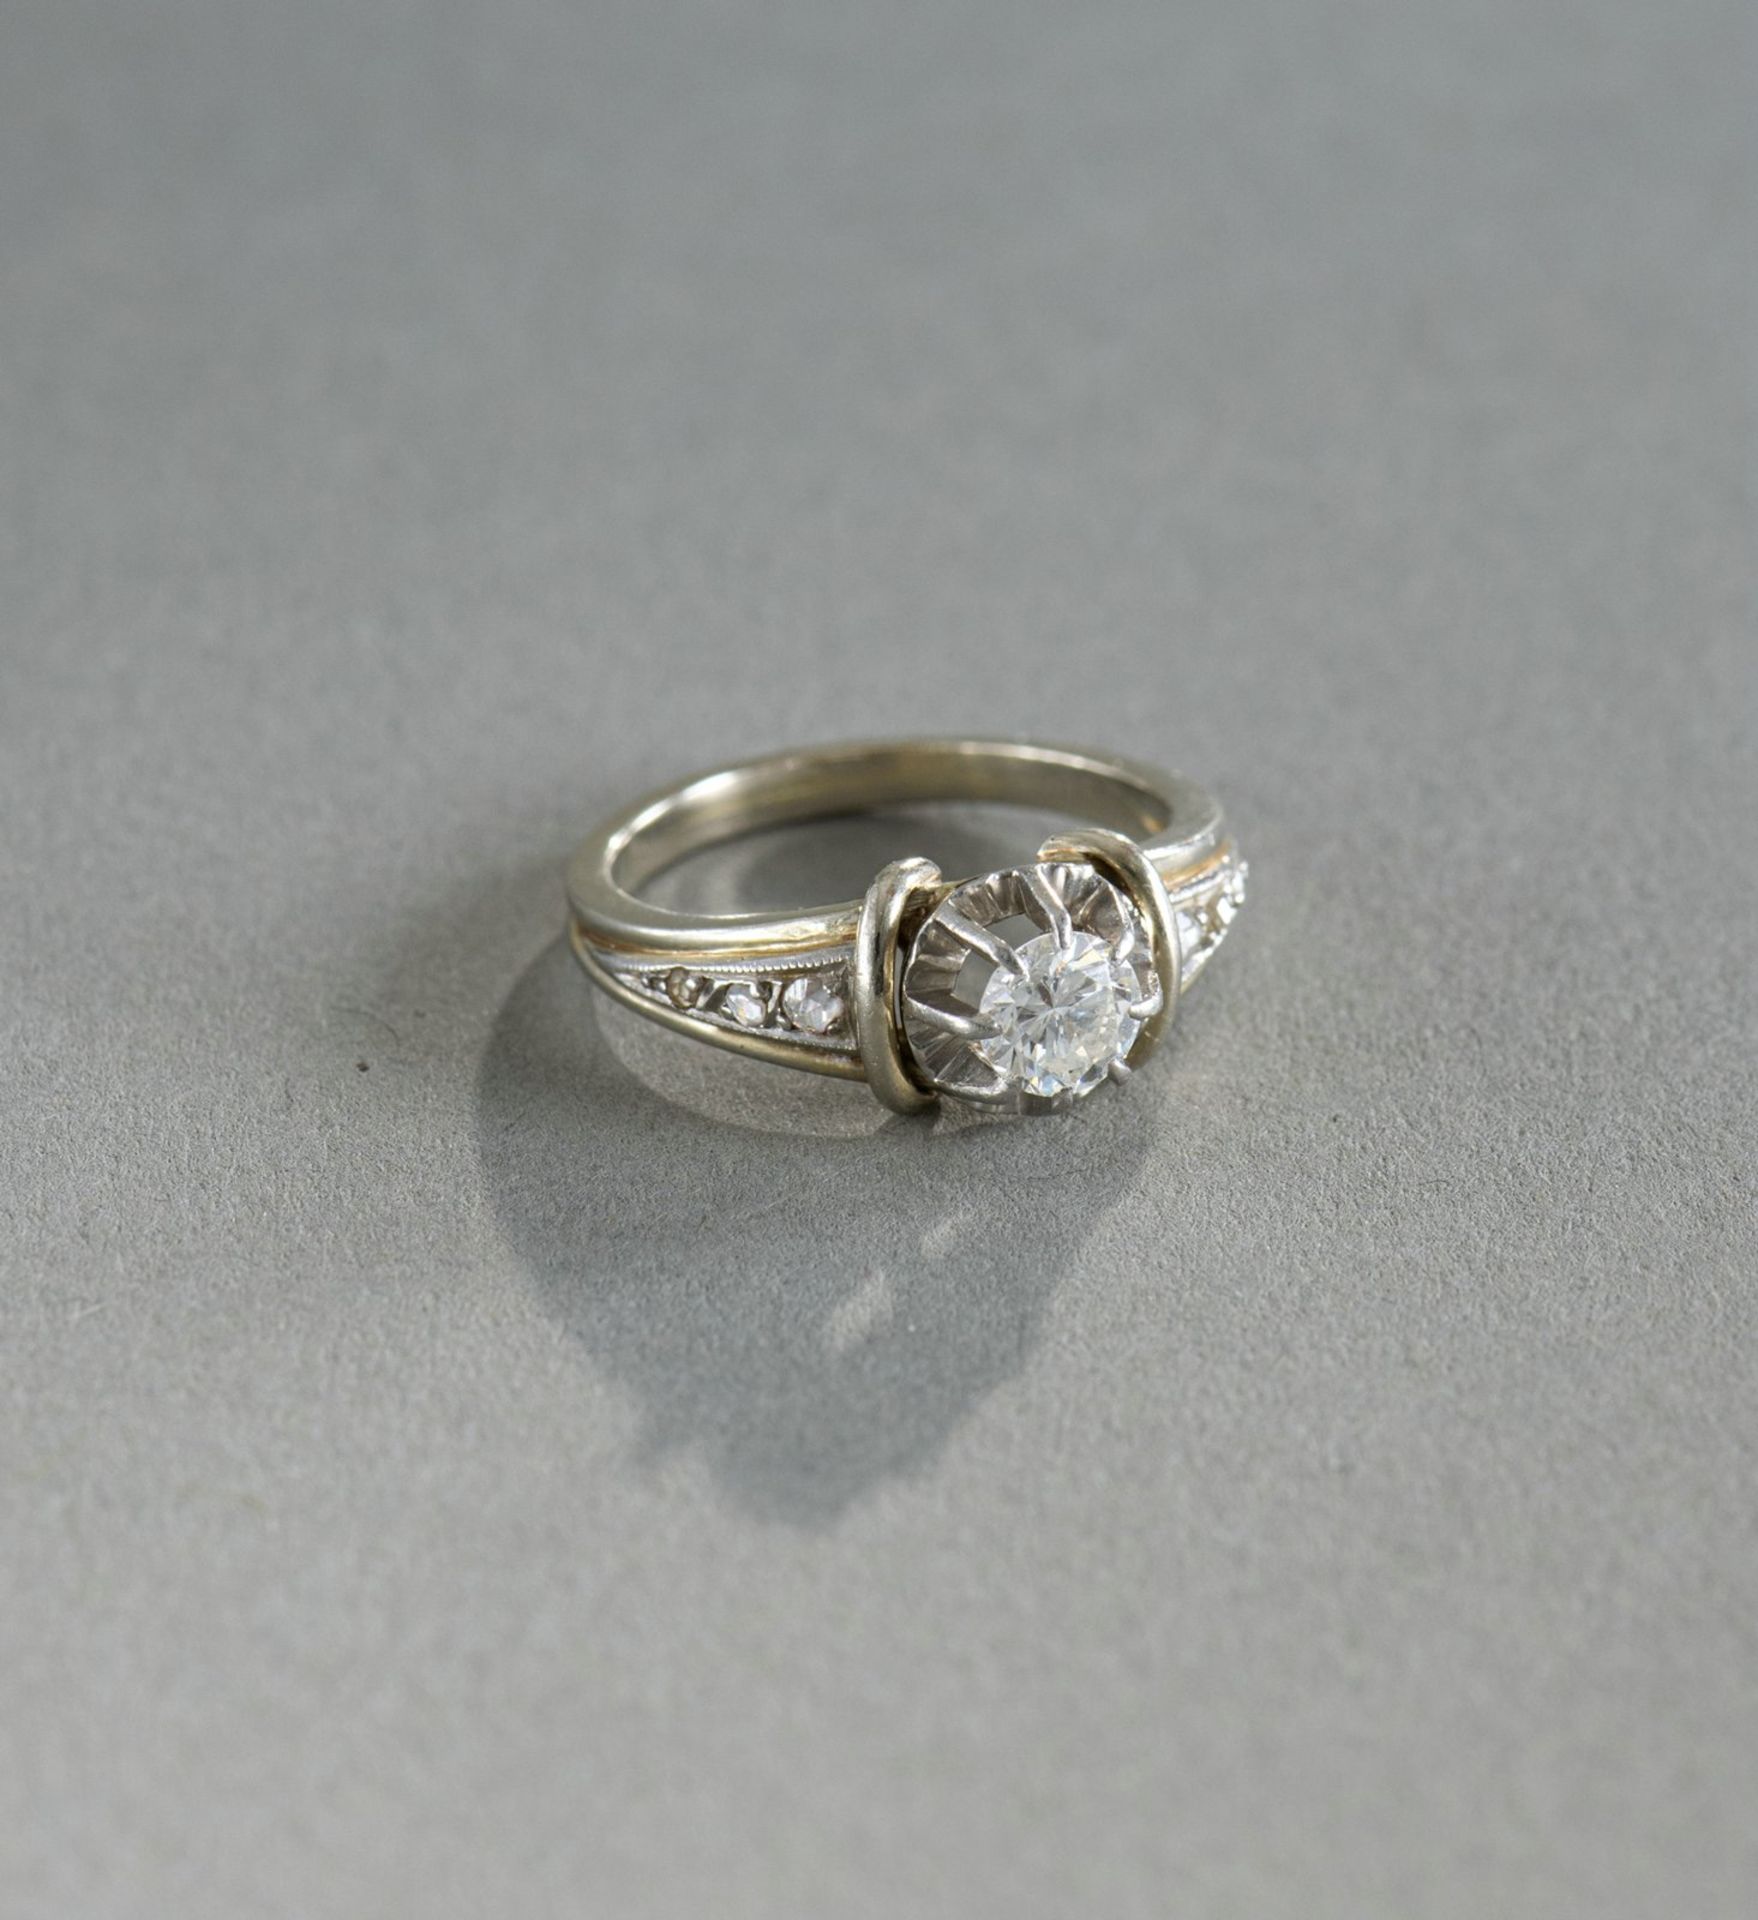 A DIAMOND RING - Image 3 of 7